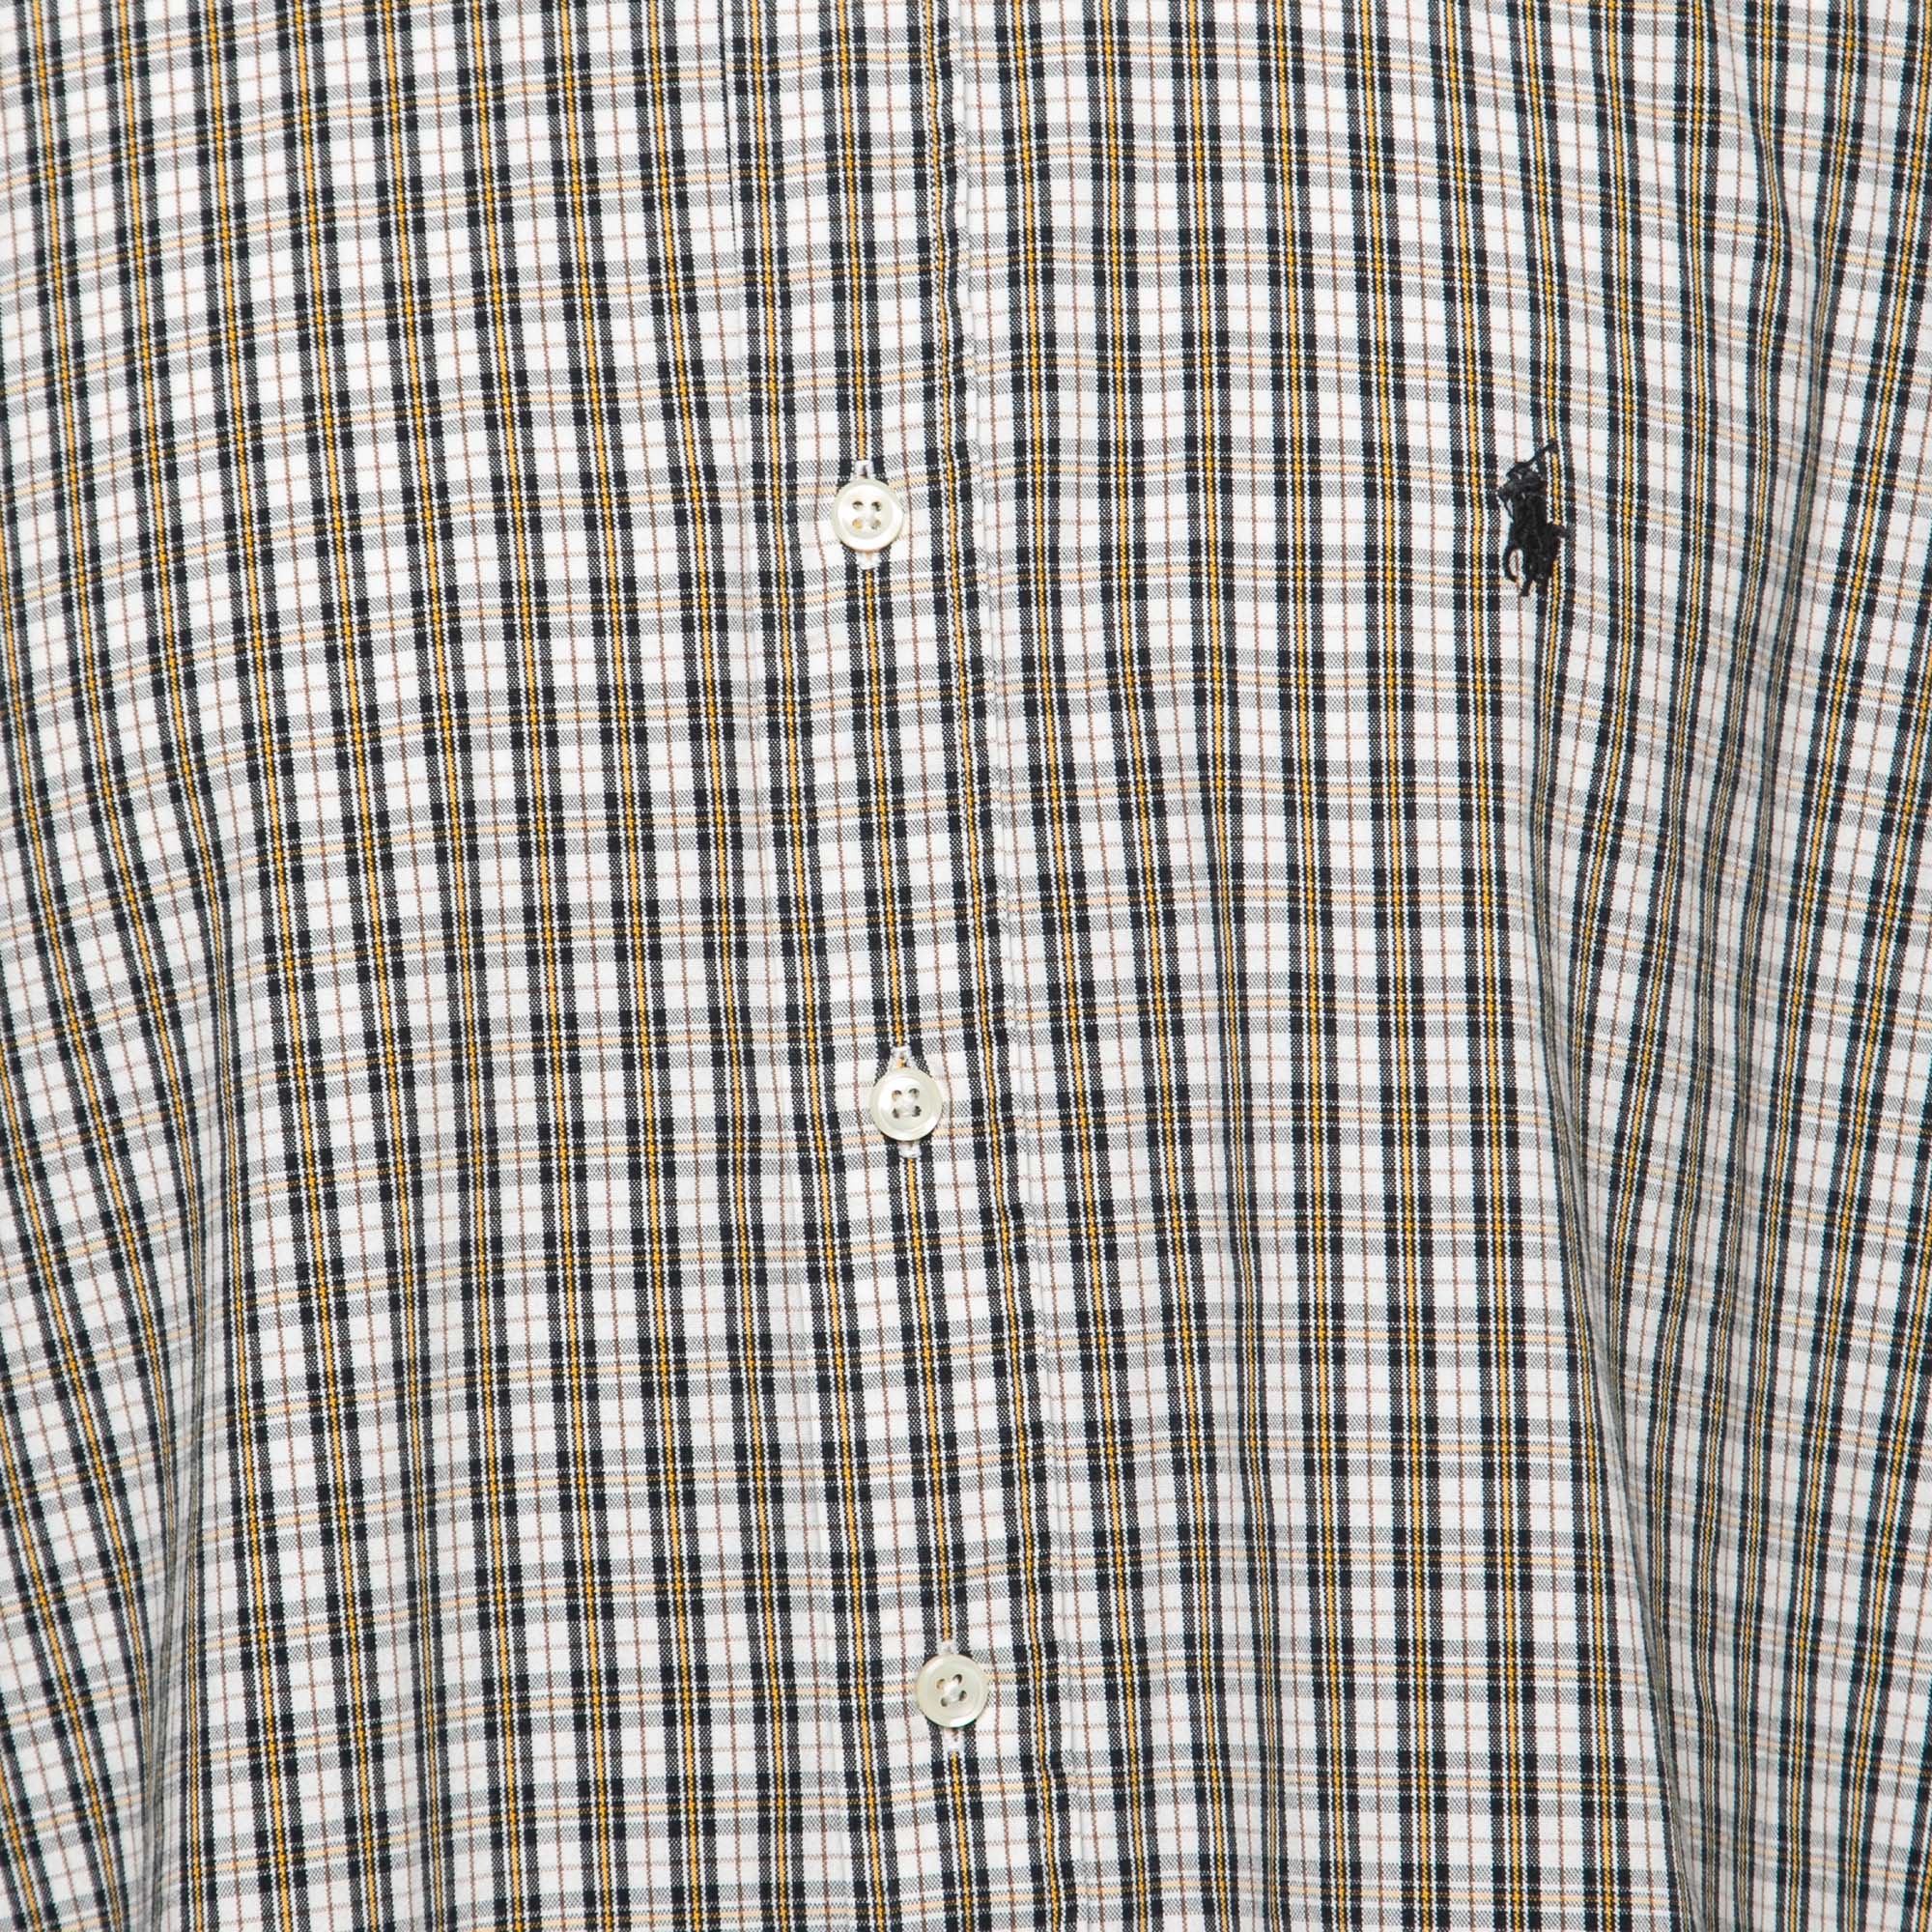 Ralph Lauren White/Yellow Checked Cotton Button Down Blake Shirt XL